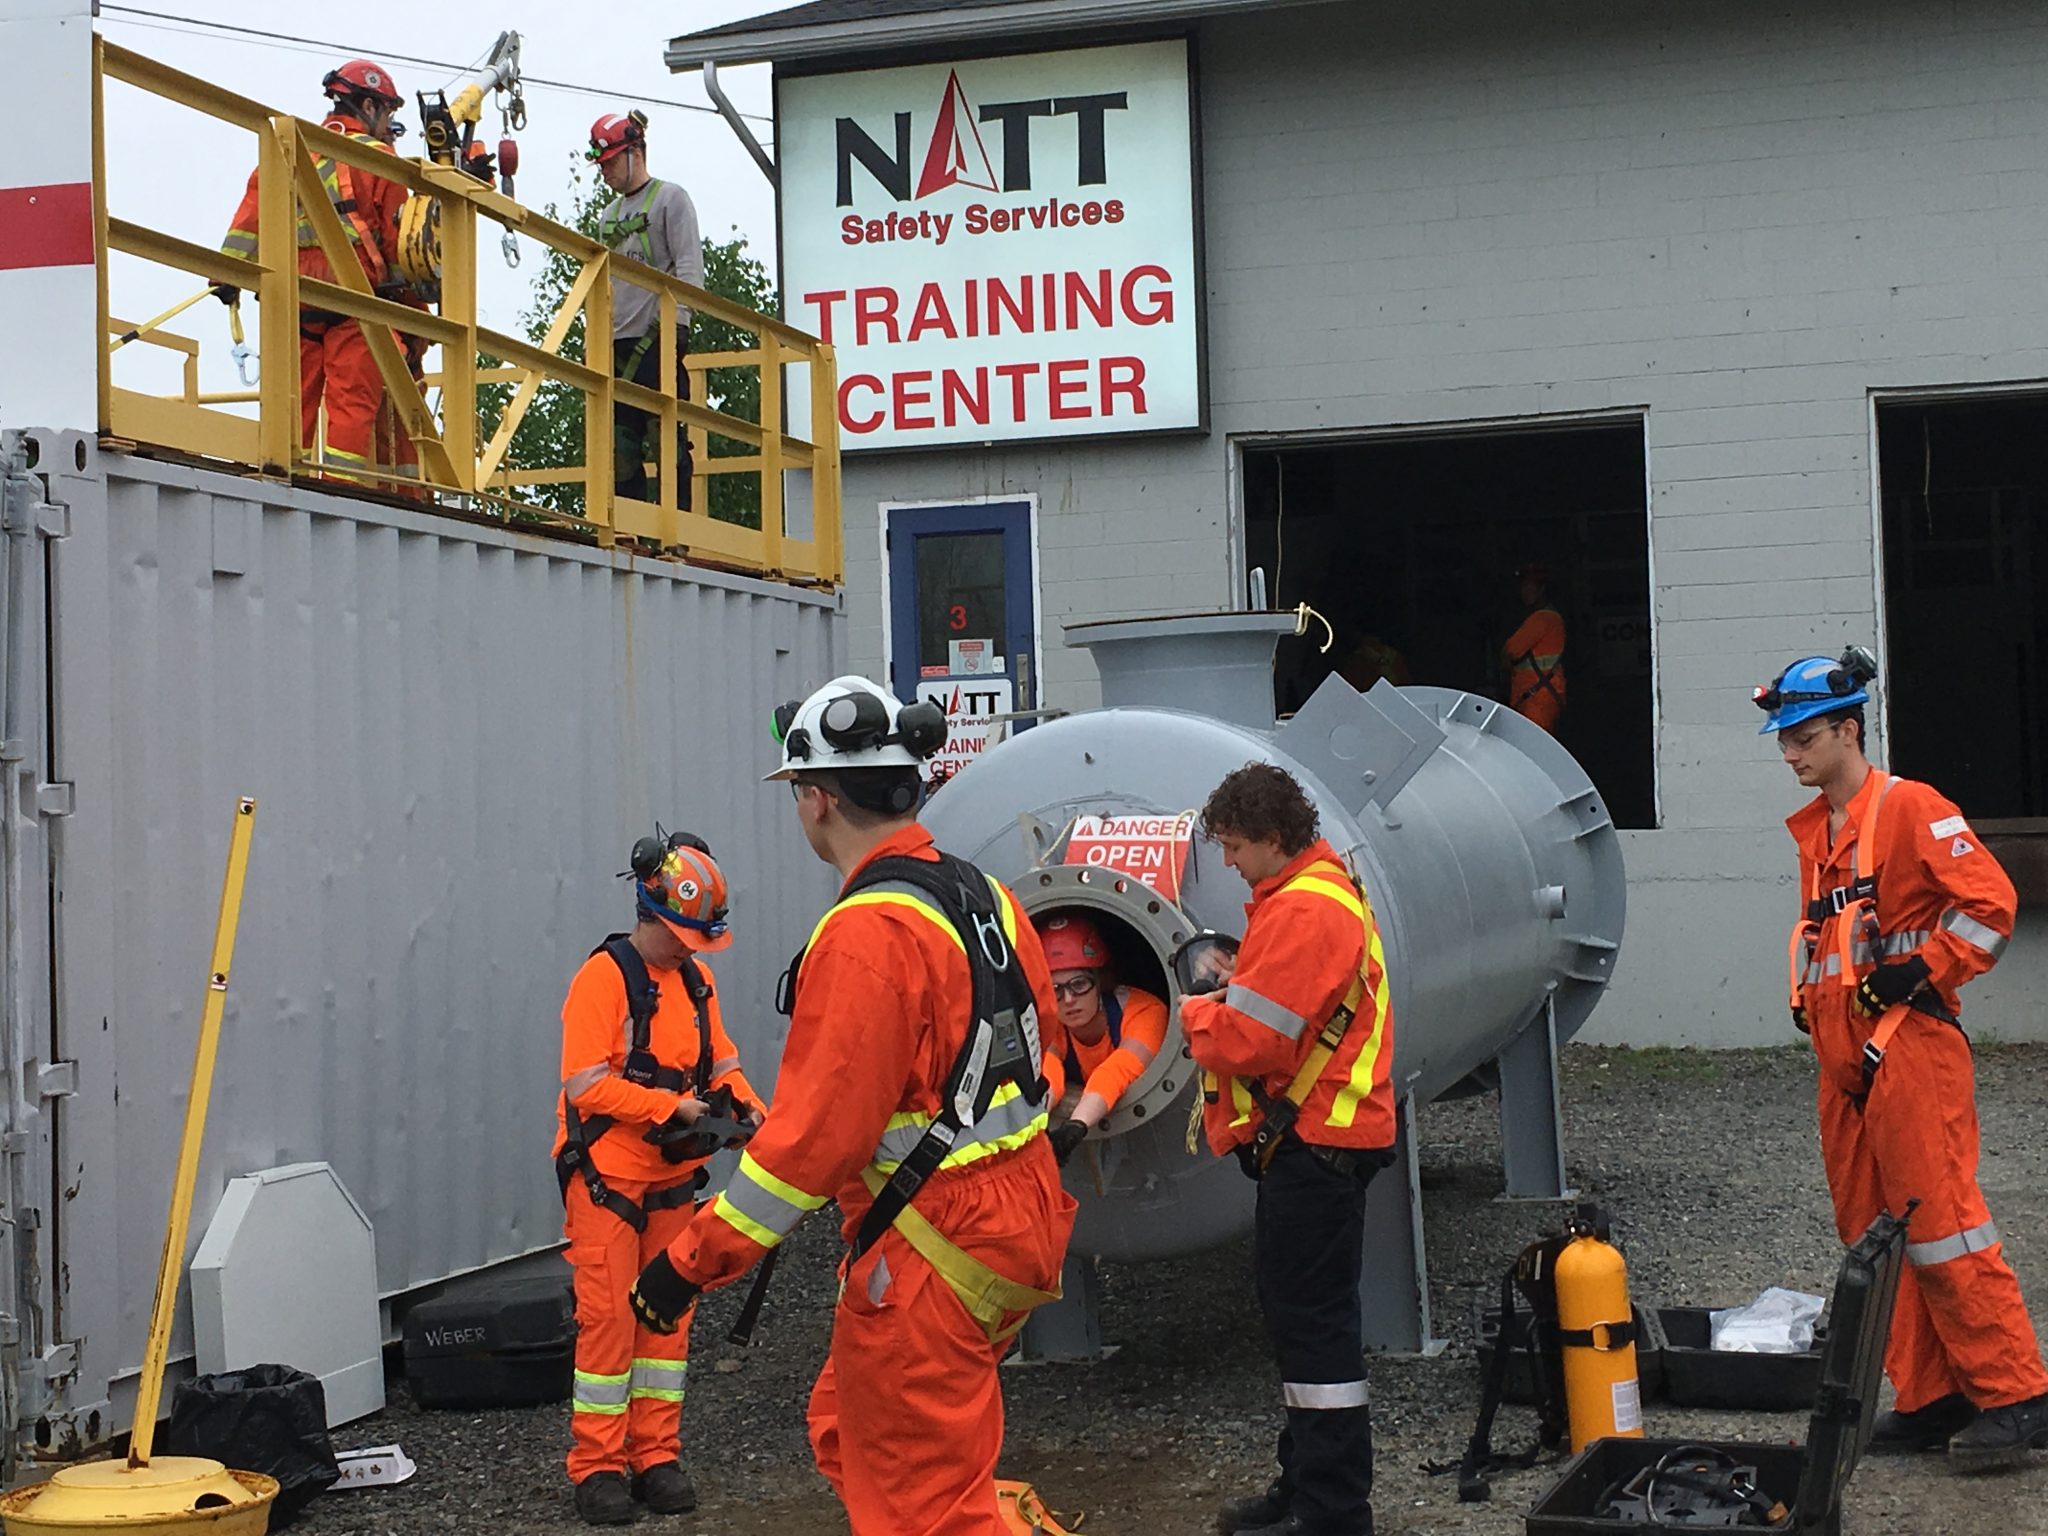 Confined Space Rescue sudbury NATT Safety Services